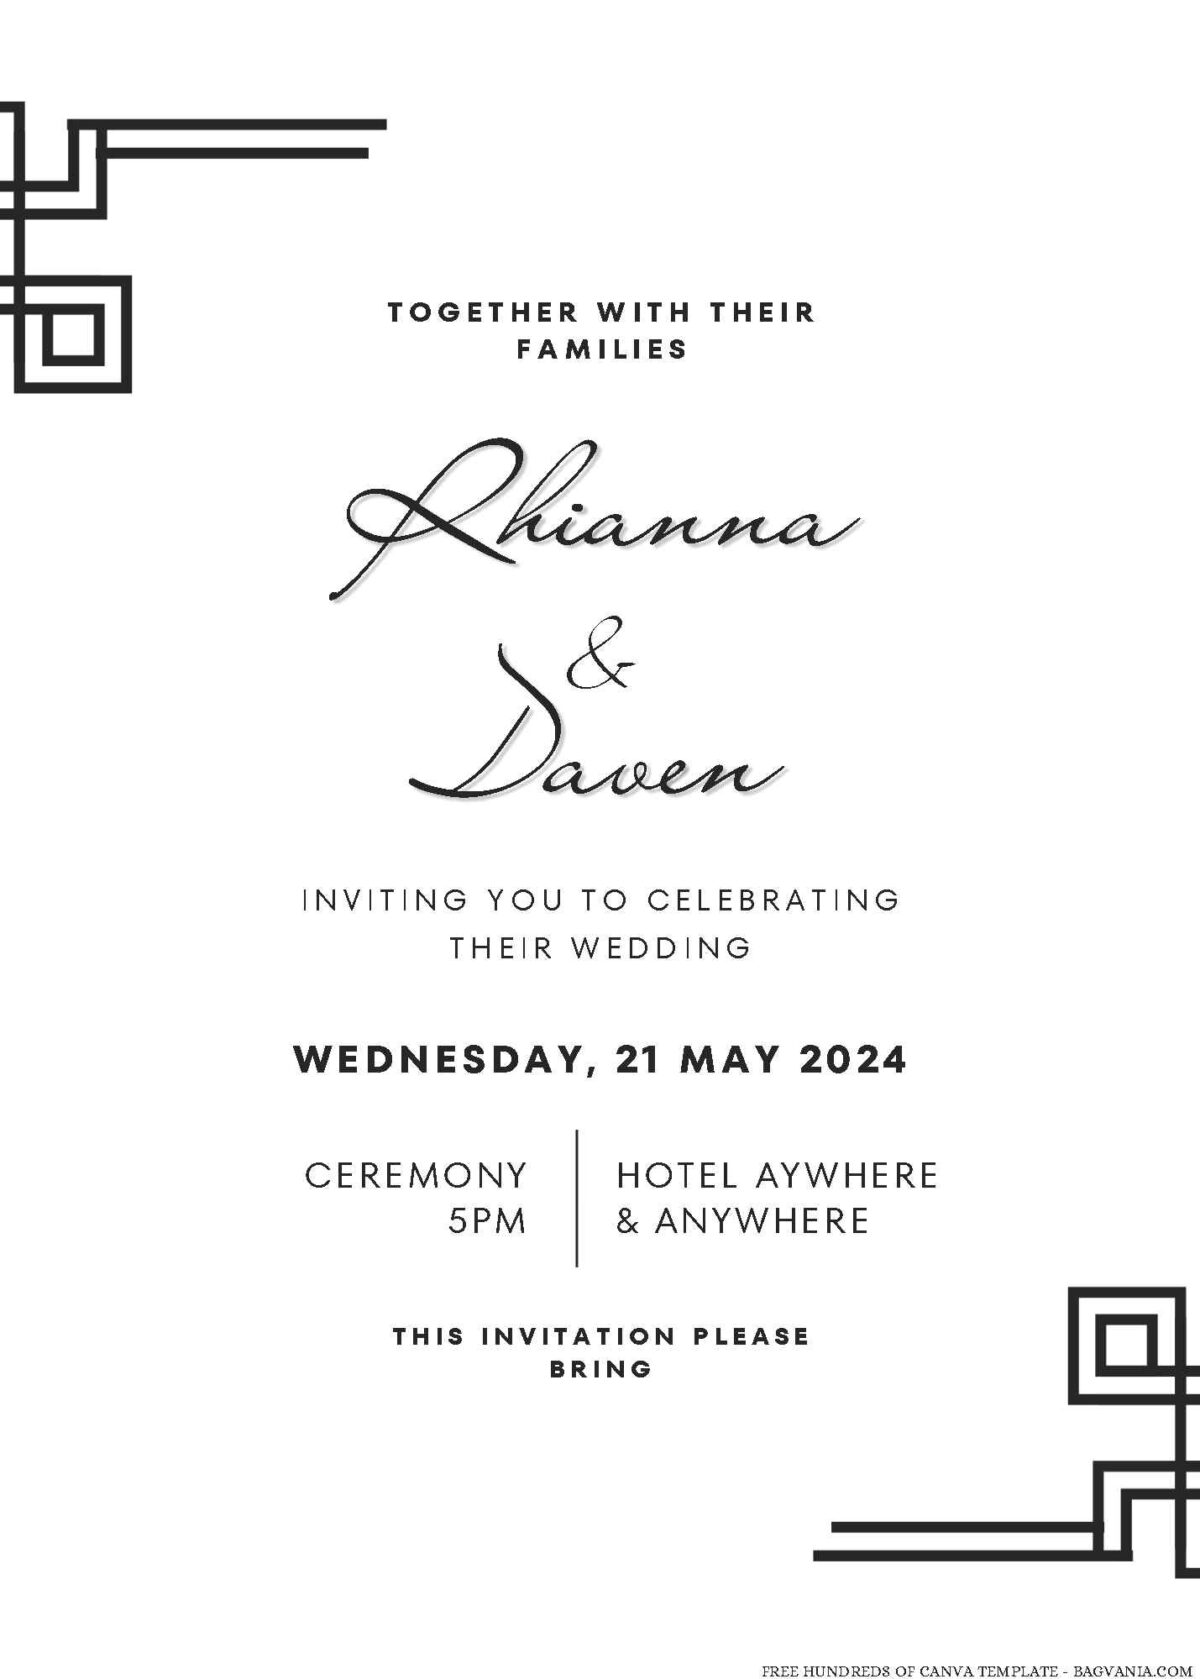 Free Editable Art Deco Rectangle Frame Wedding Invitation